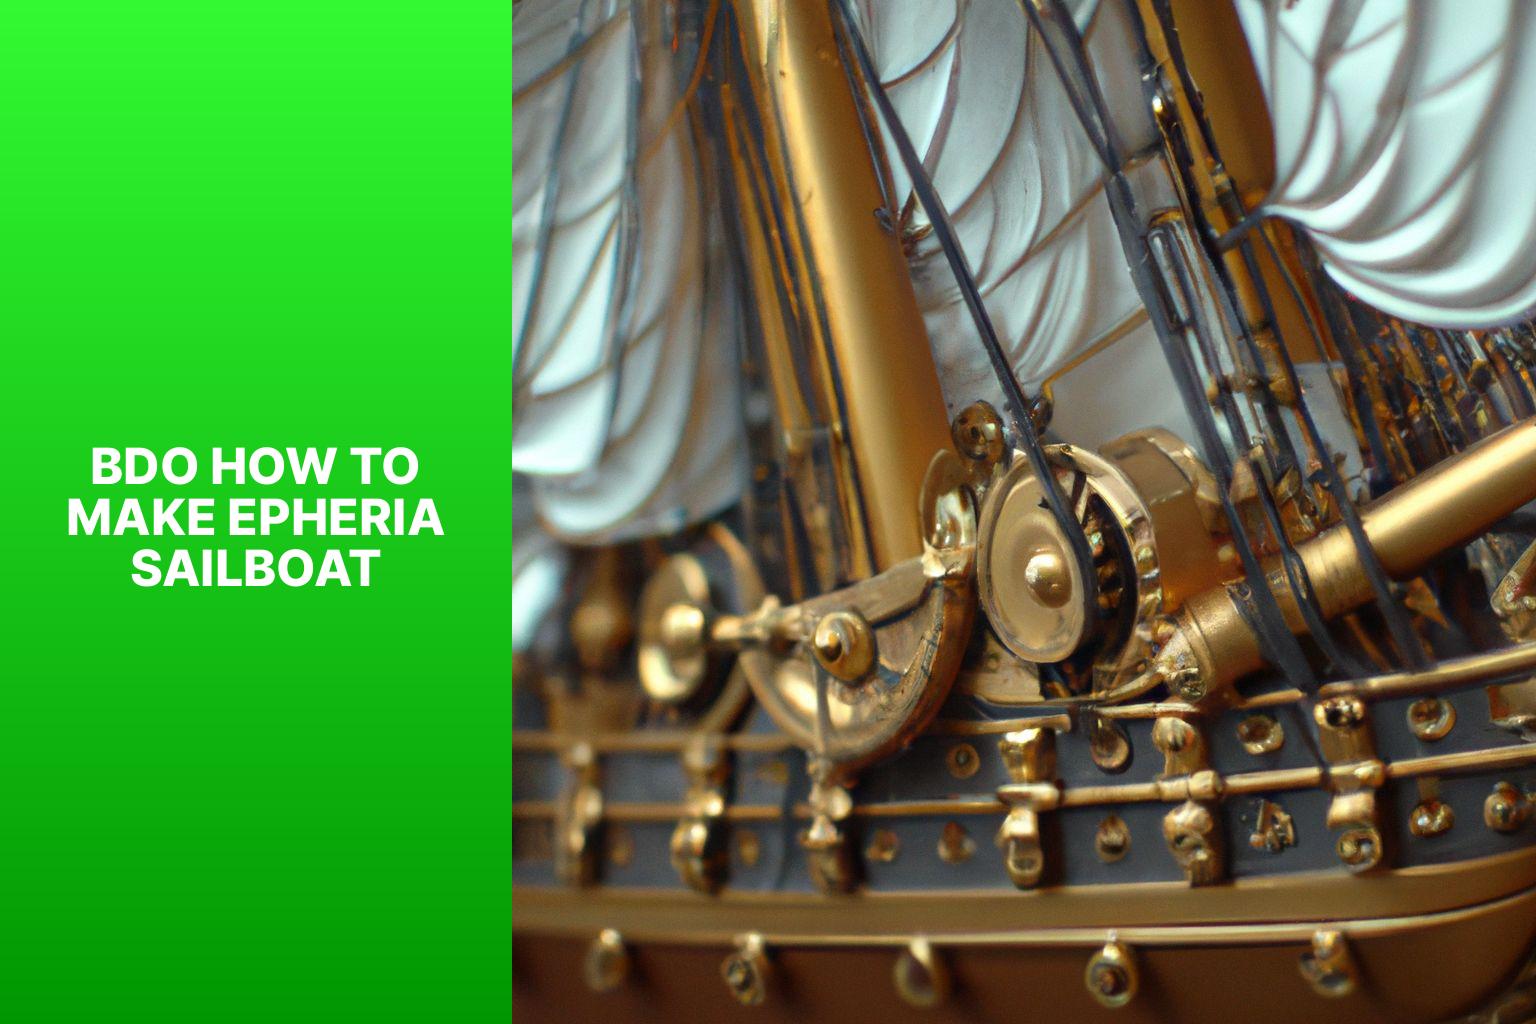 epheria sailboat brass figurehead